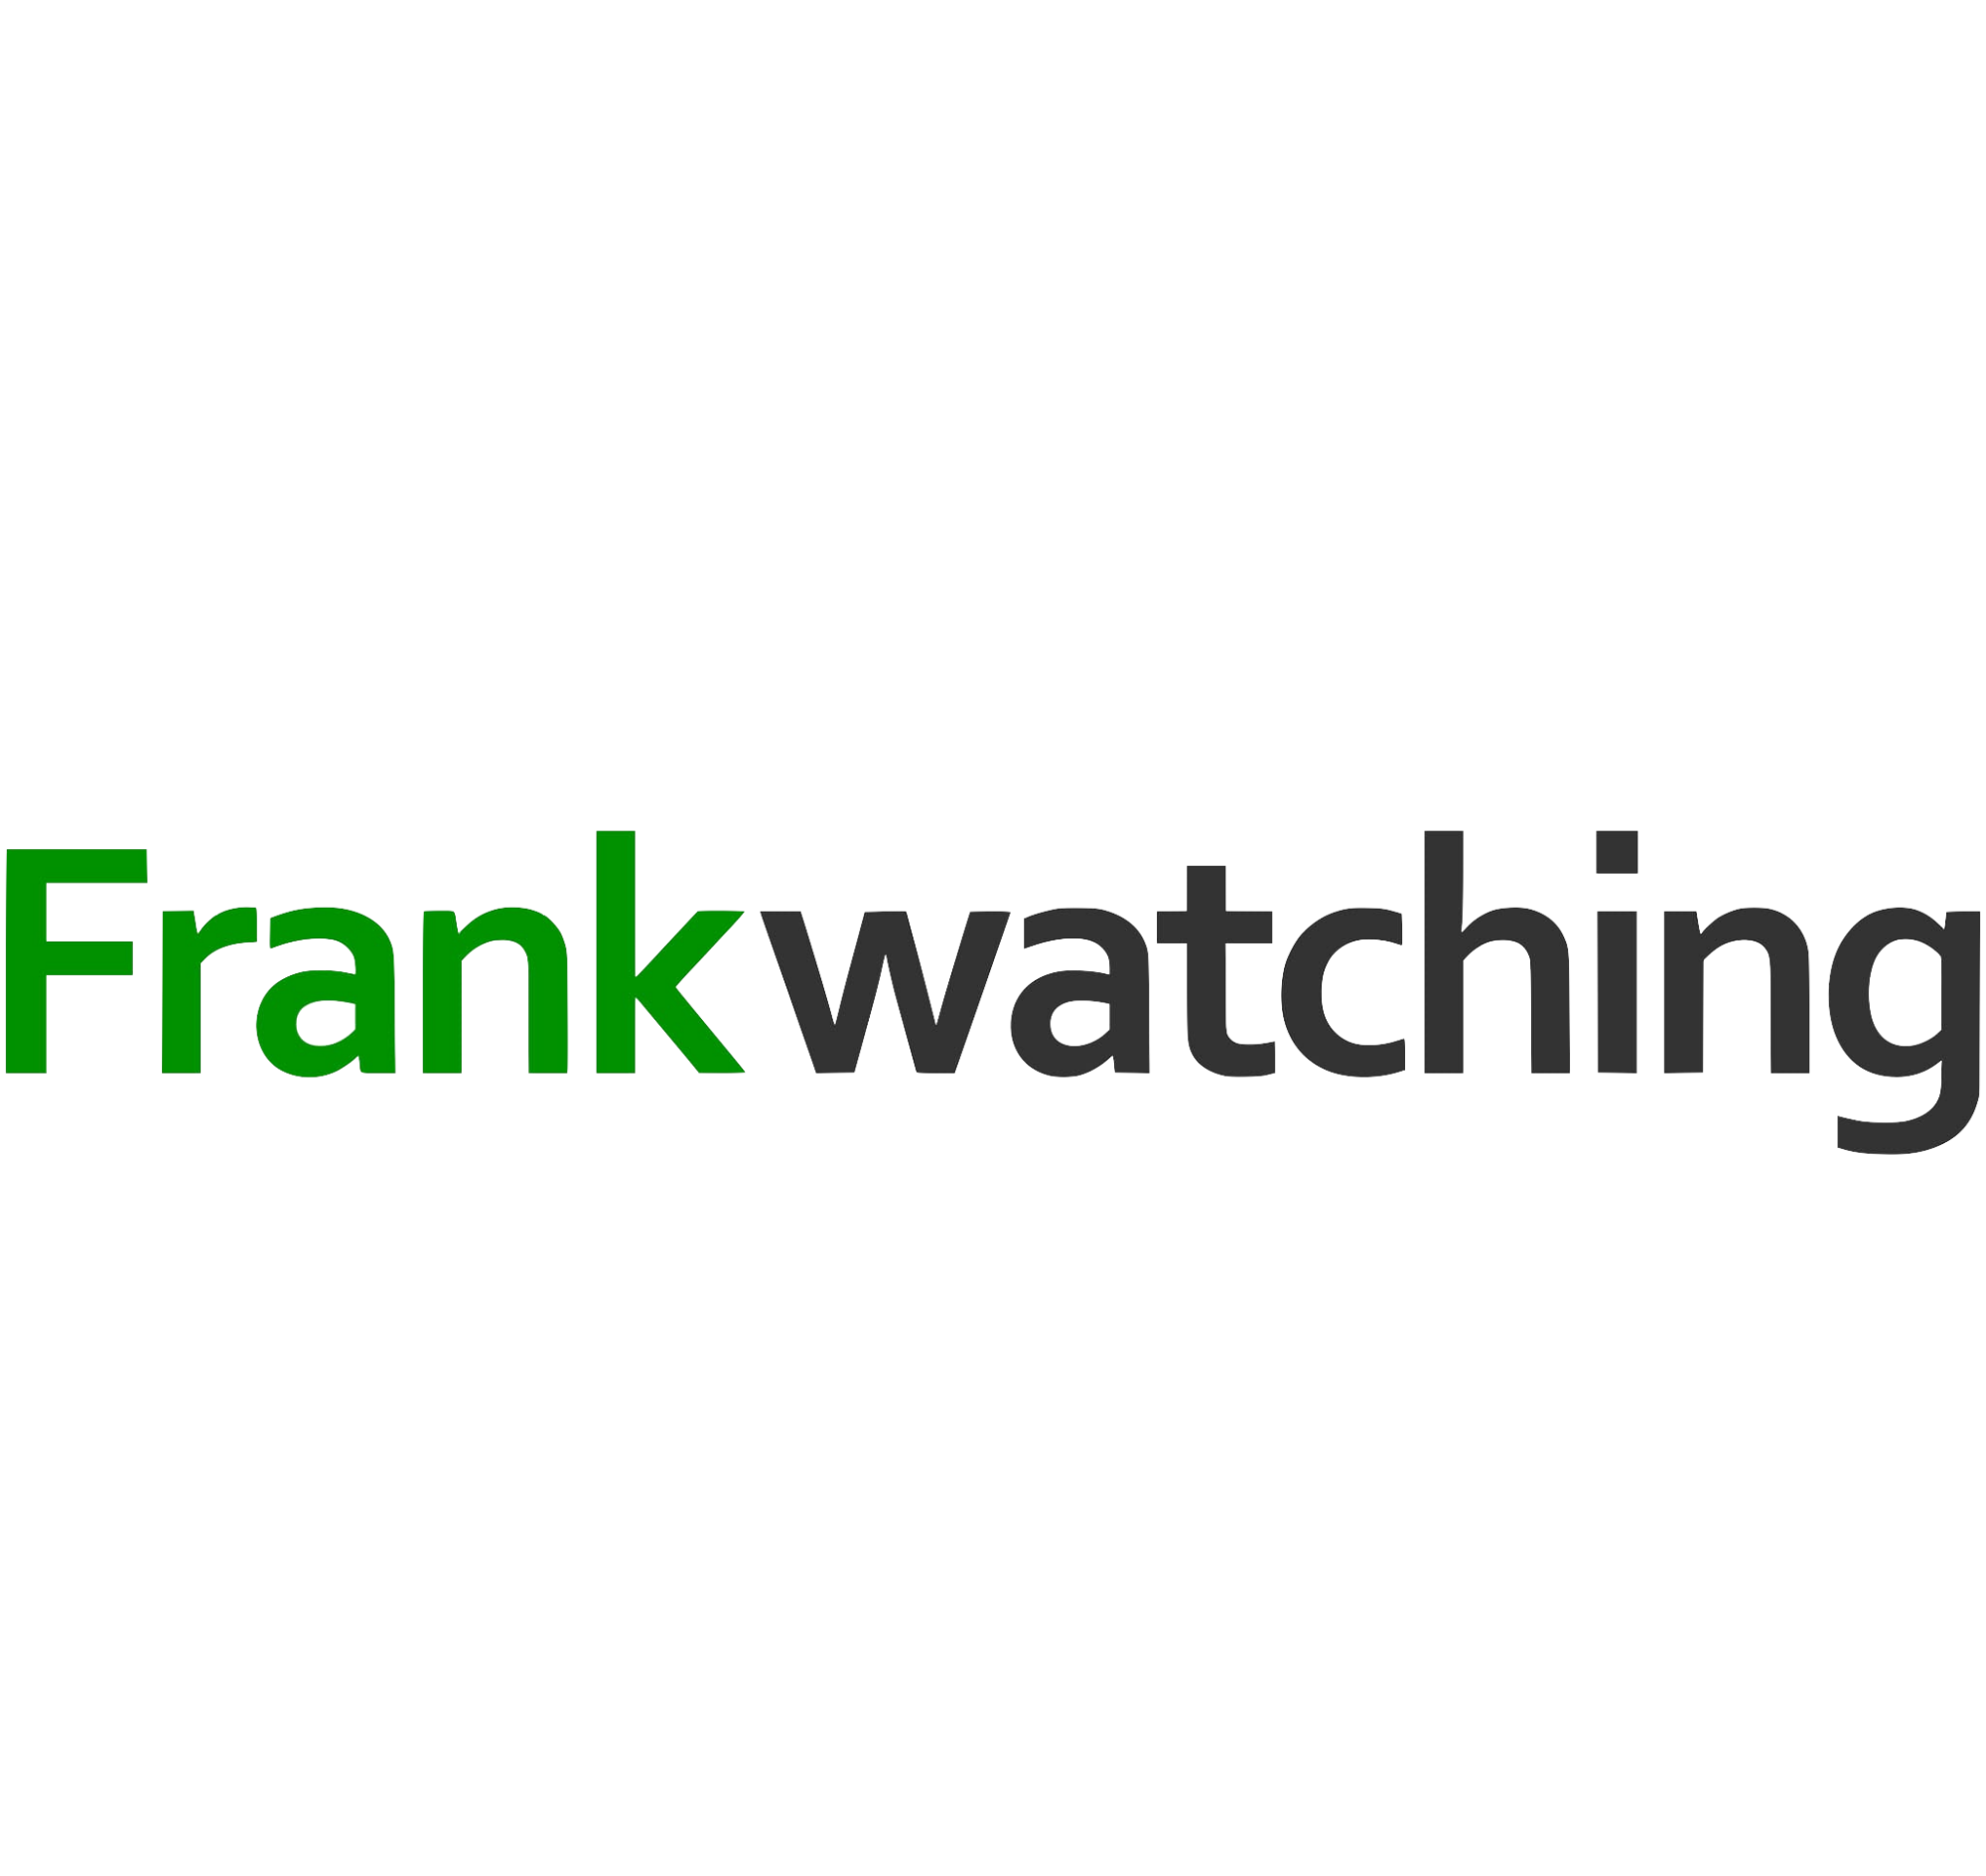 frank-watching